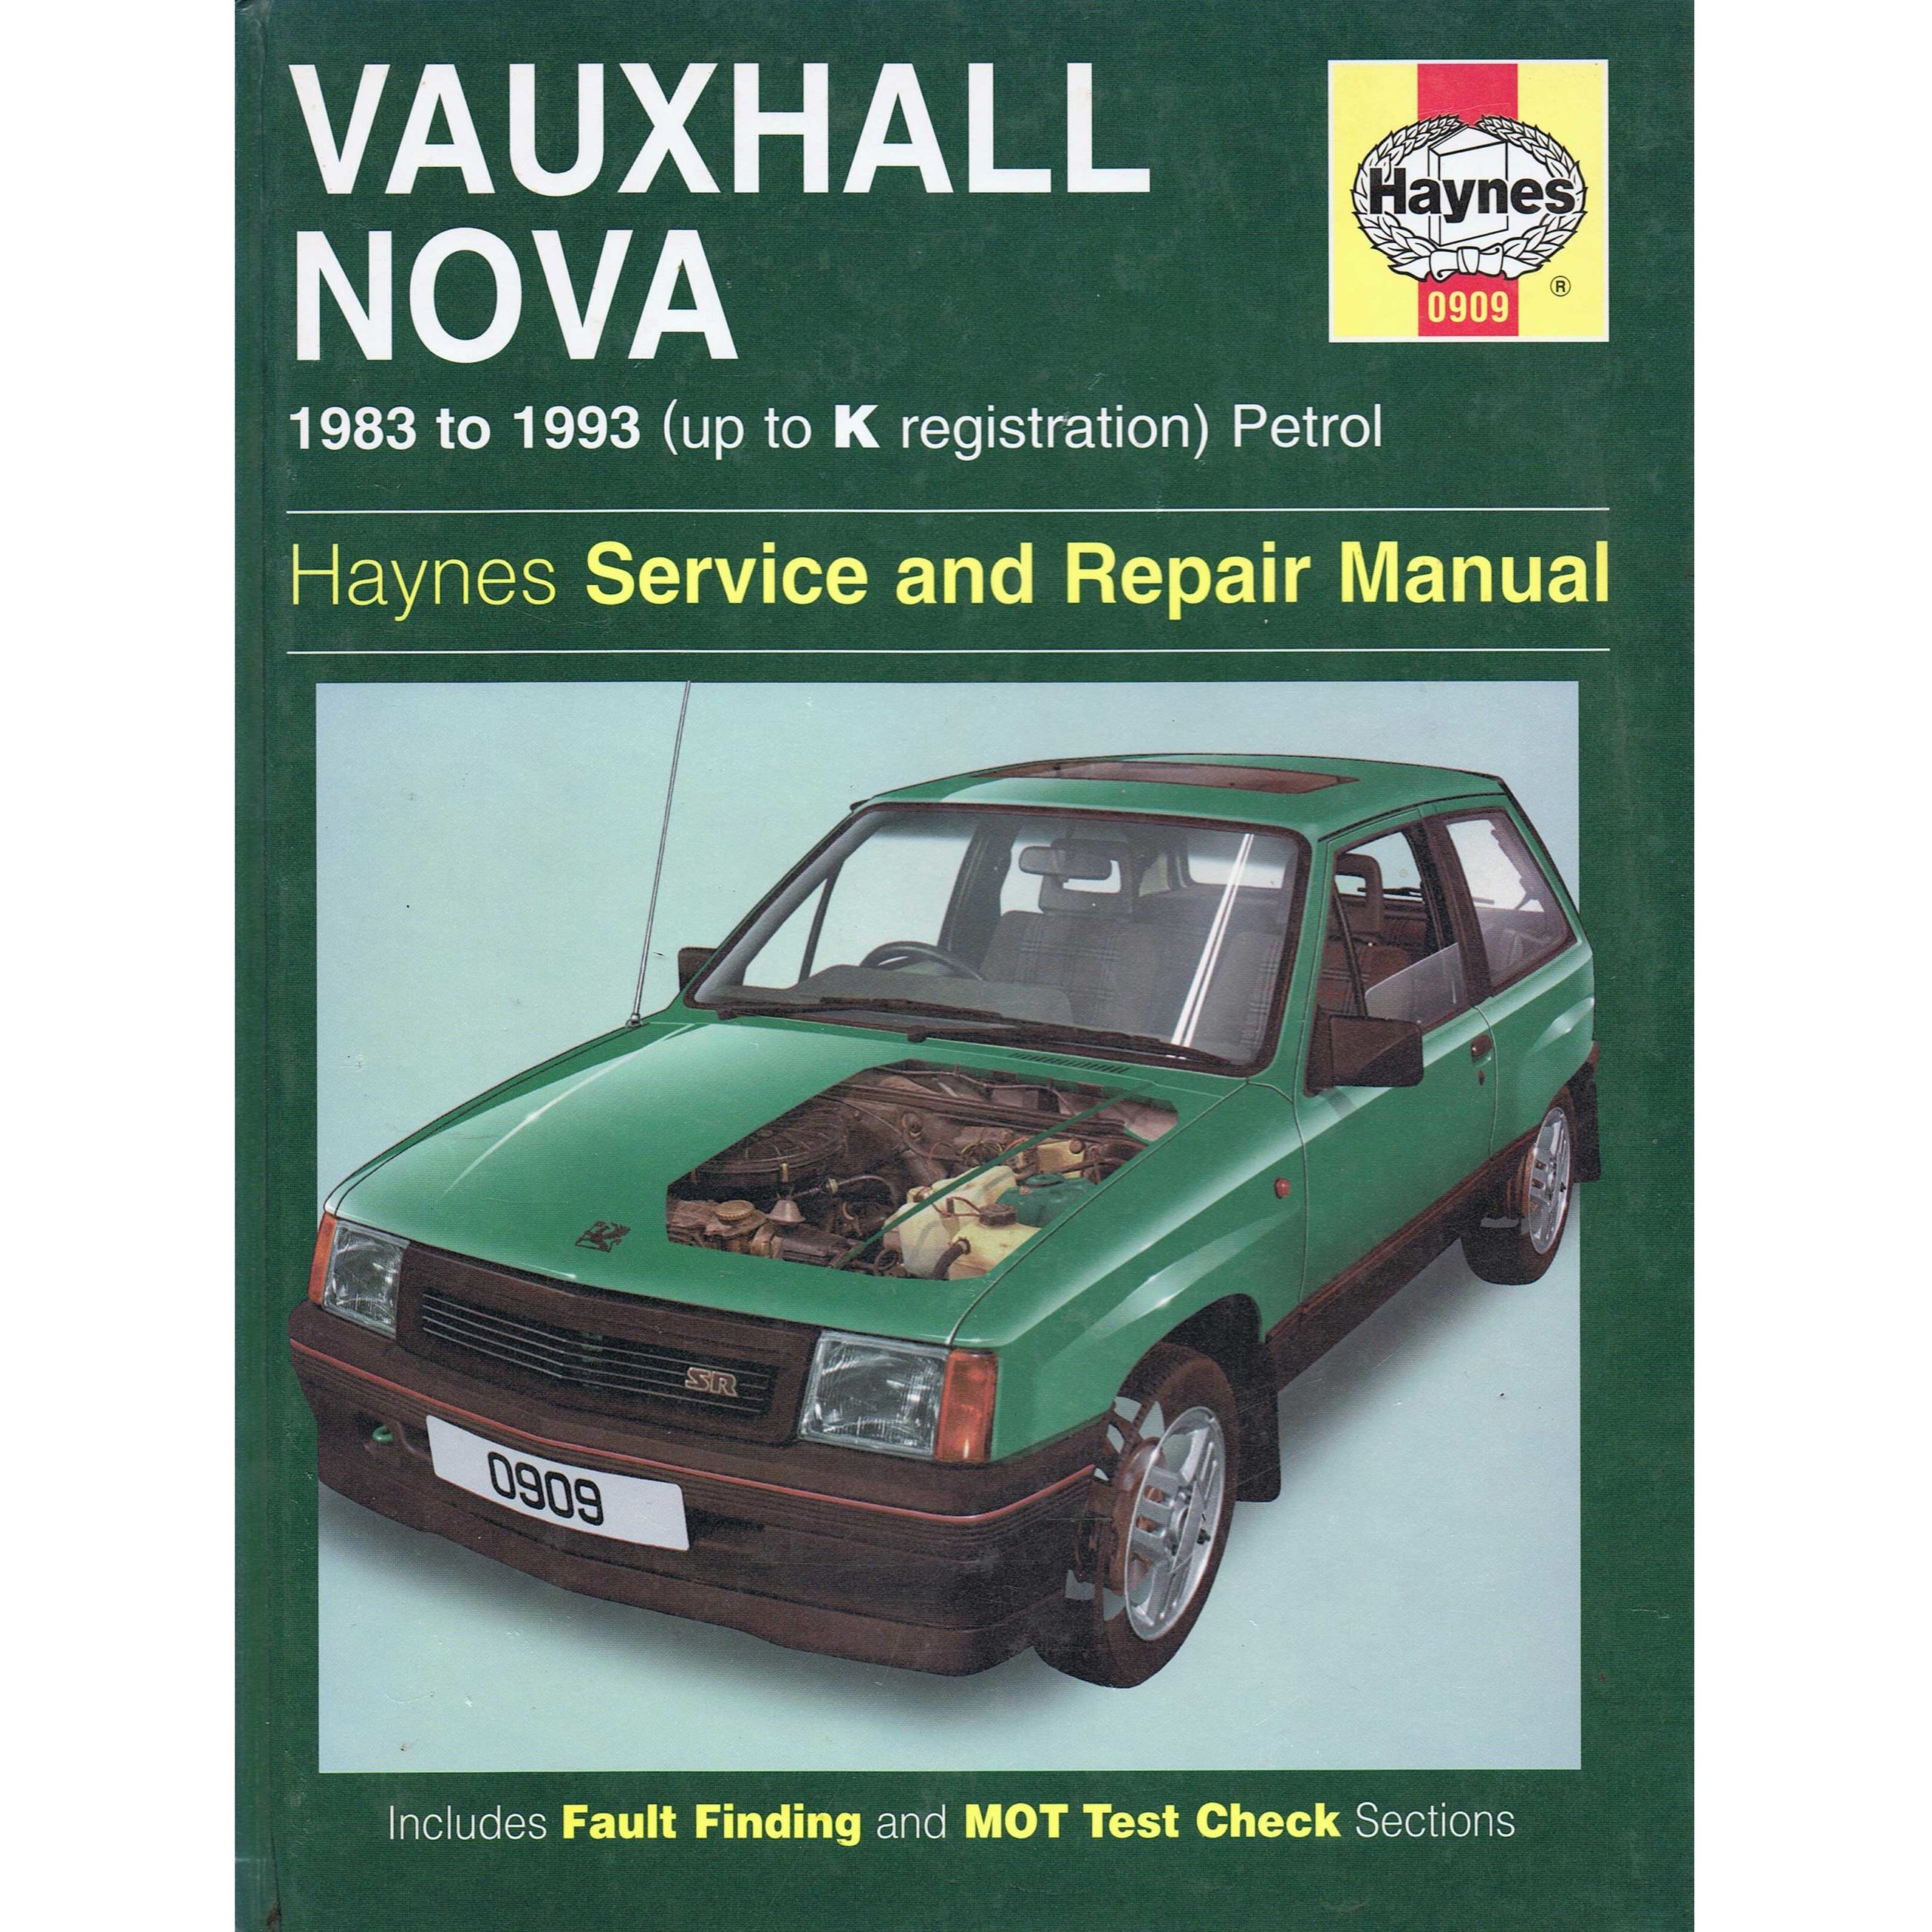 NEW HAYNES HANDBOOK AND DRIVERS GUIDE VAUXHALL NOVA 1983 TO 1992 1820 